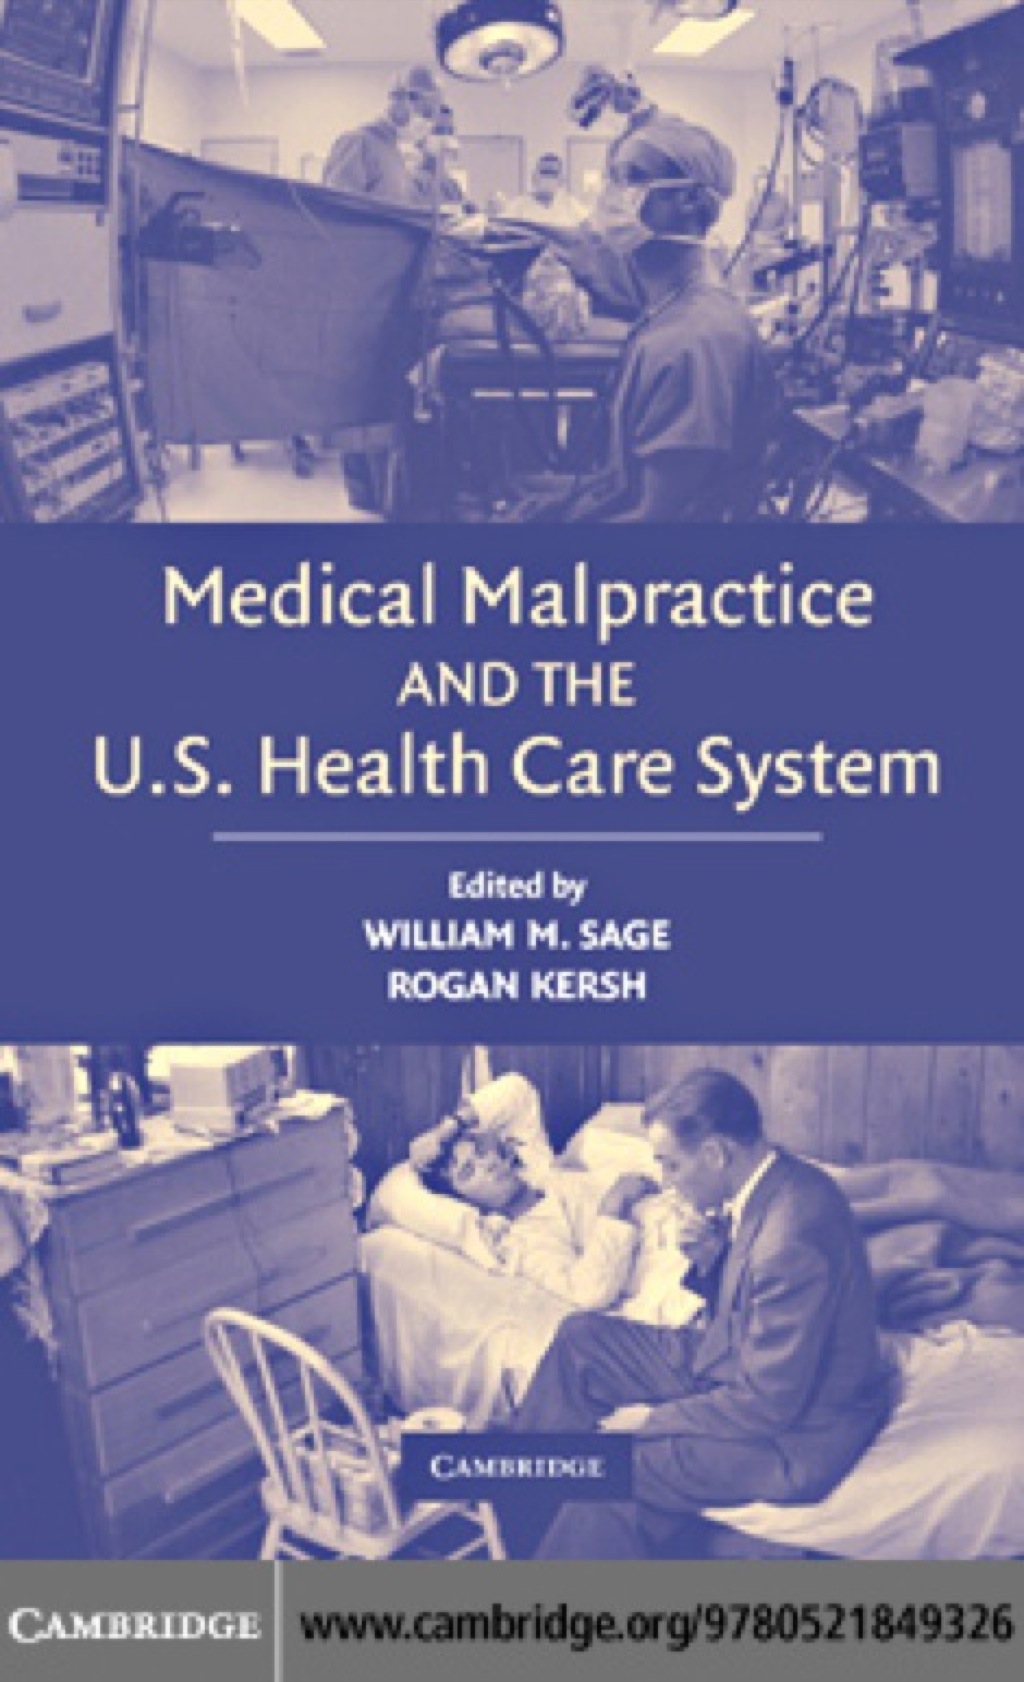 Medical Malpractice and the U.S. Health Care System (eBook) - William M. Sage